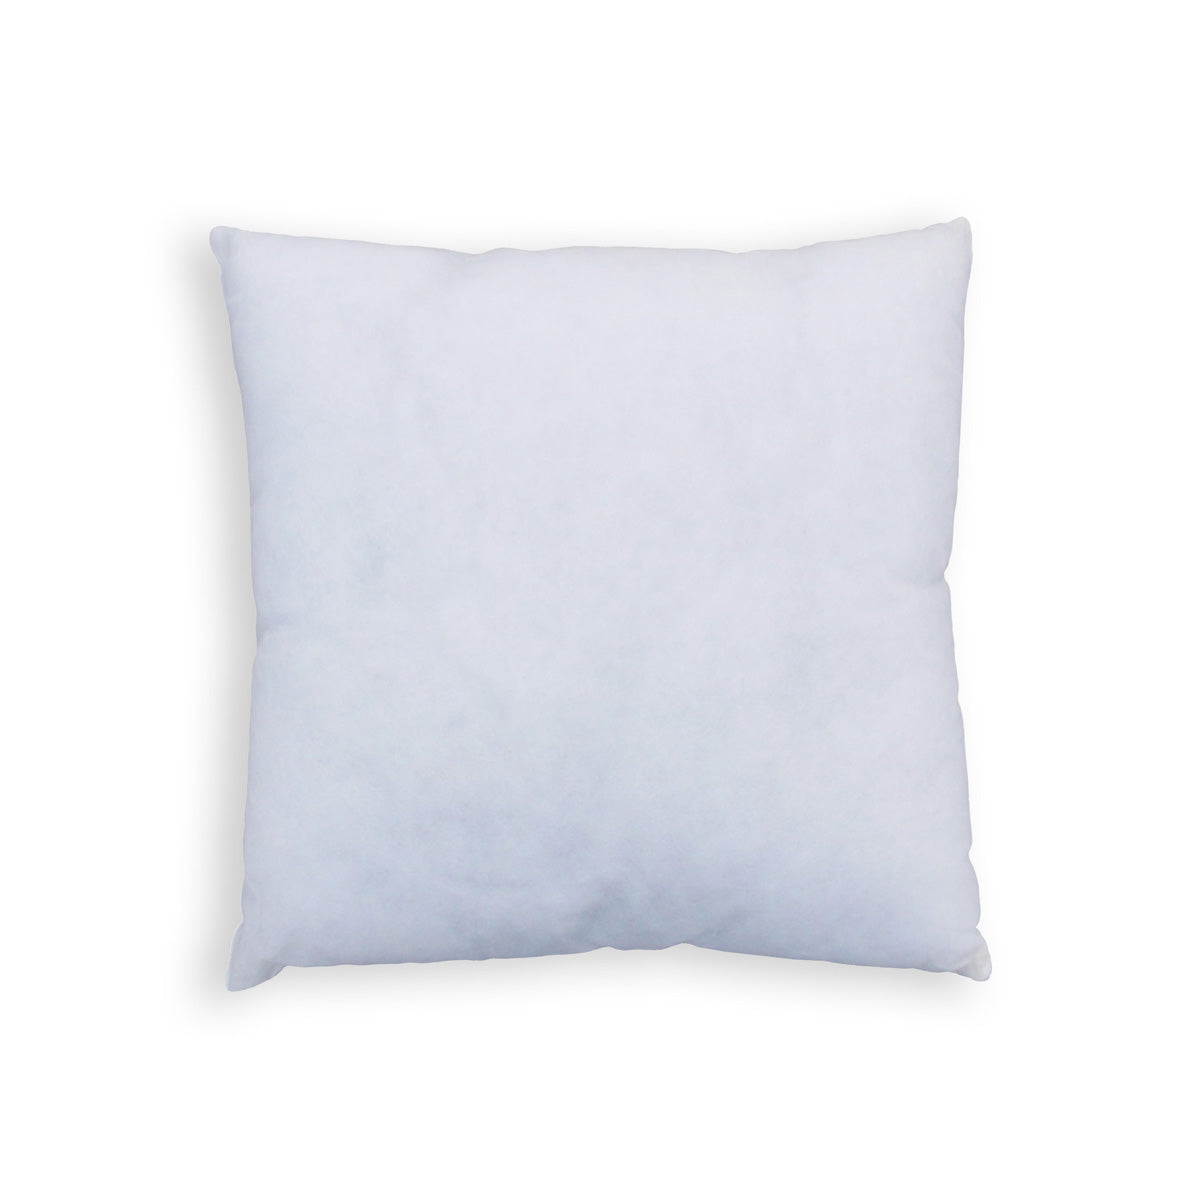 Pillow insert - square shape